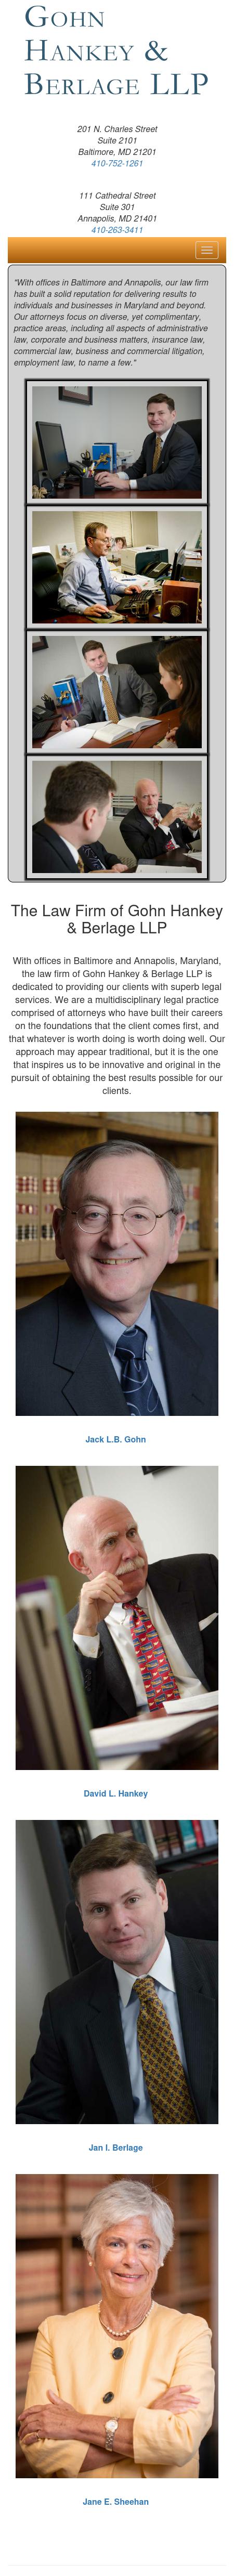 Gohn Hankey Stichel & Berlage LLP - Baltimore MD Lawyers